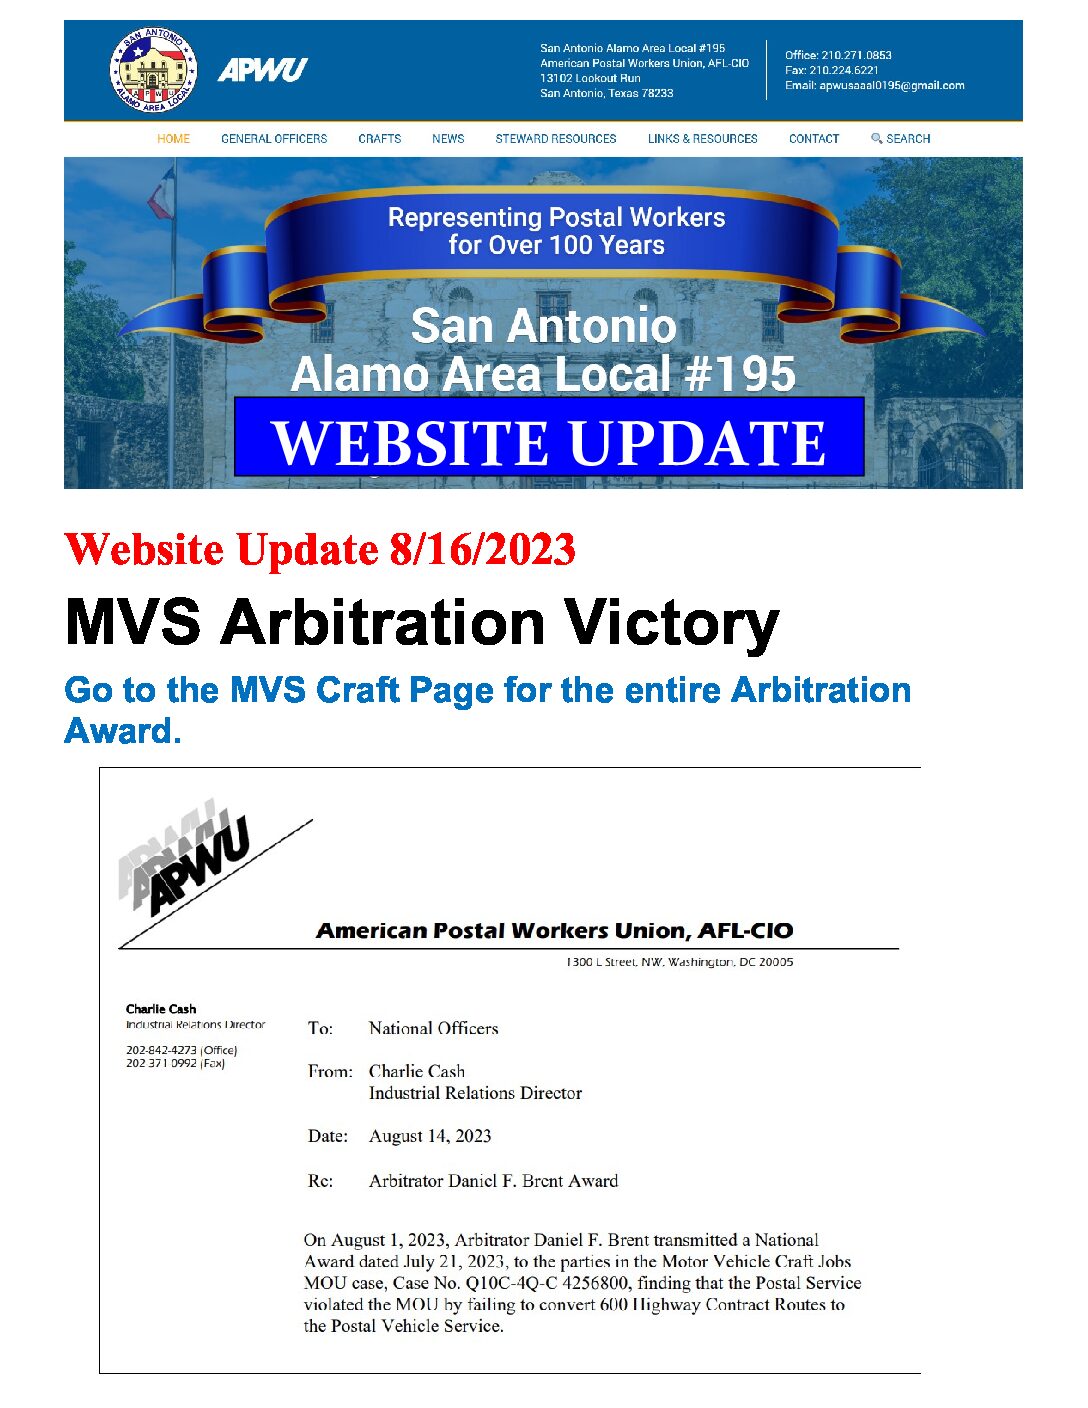 MVS AWARD – Mgmt Failed to Convert 600 MVS Driver Positions - 